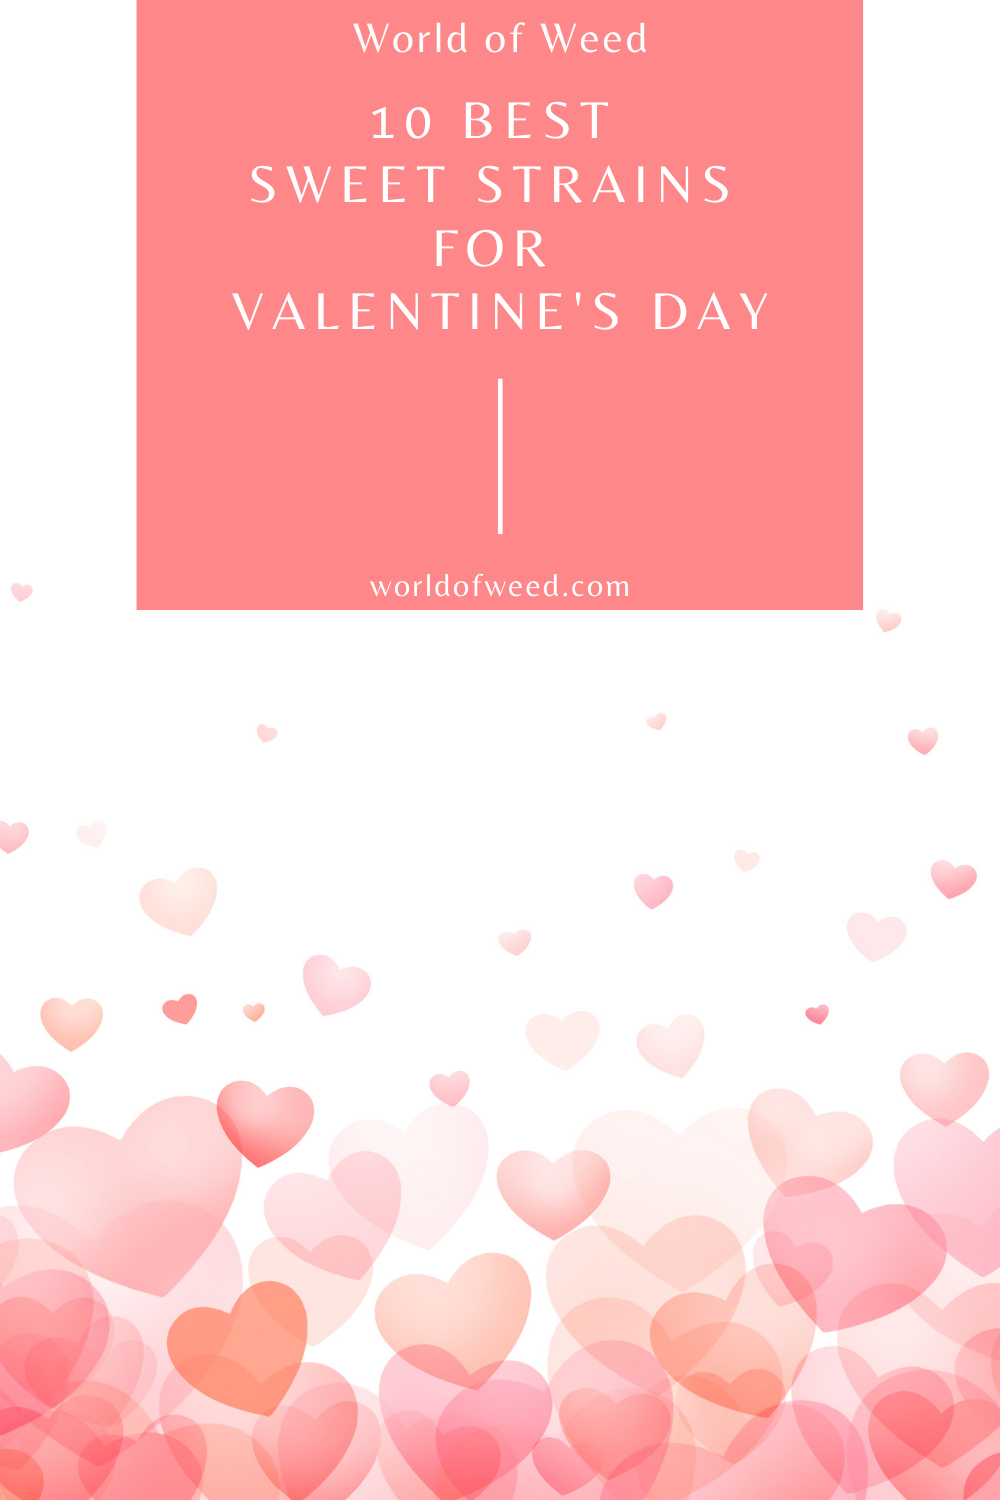 10 Best Sweet Strains for Valentine’s Day